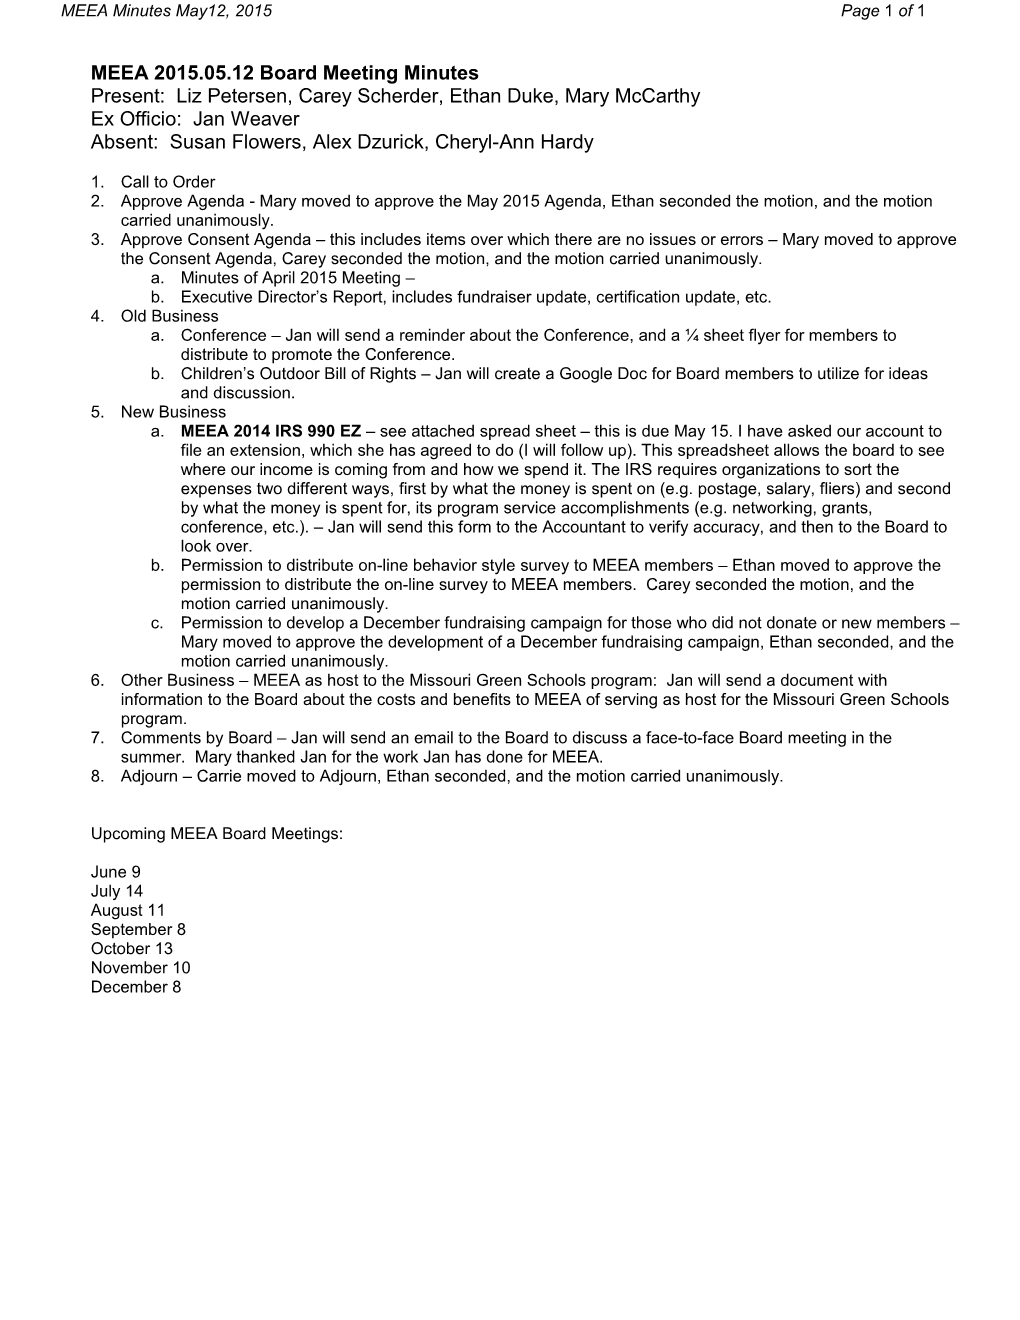 MEEA 2015.05.12 Board Meeting Minutes